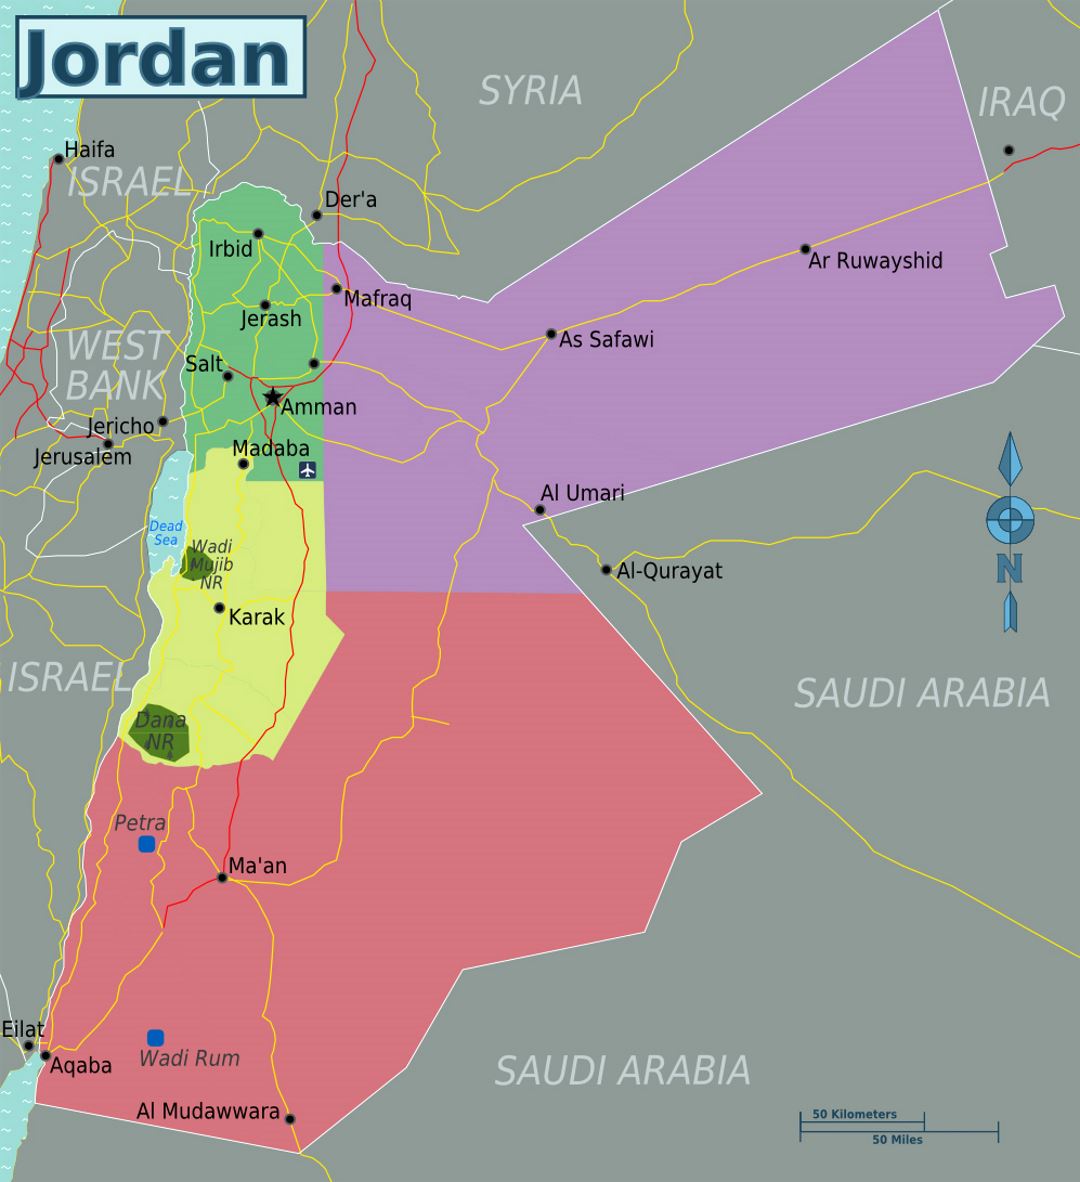 Detailed regions map of Jordan